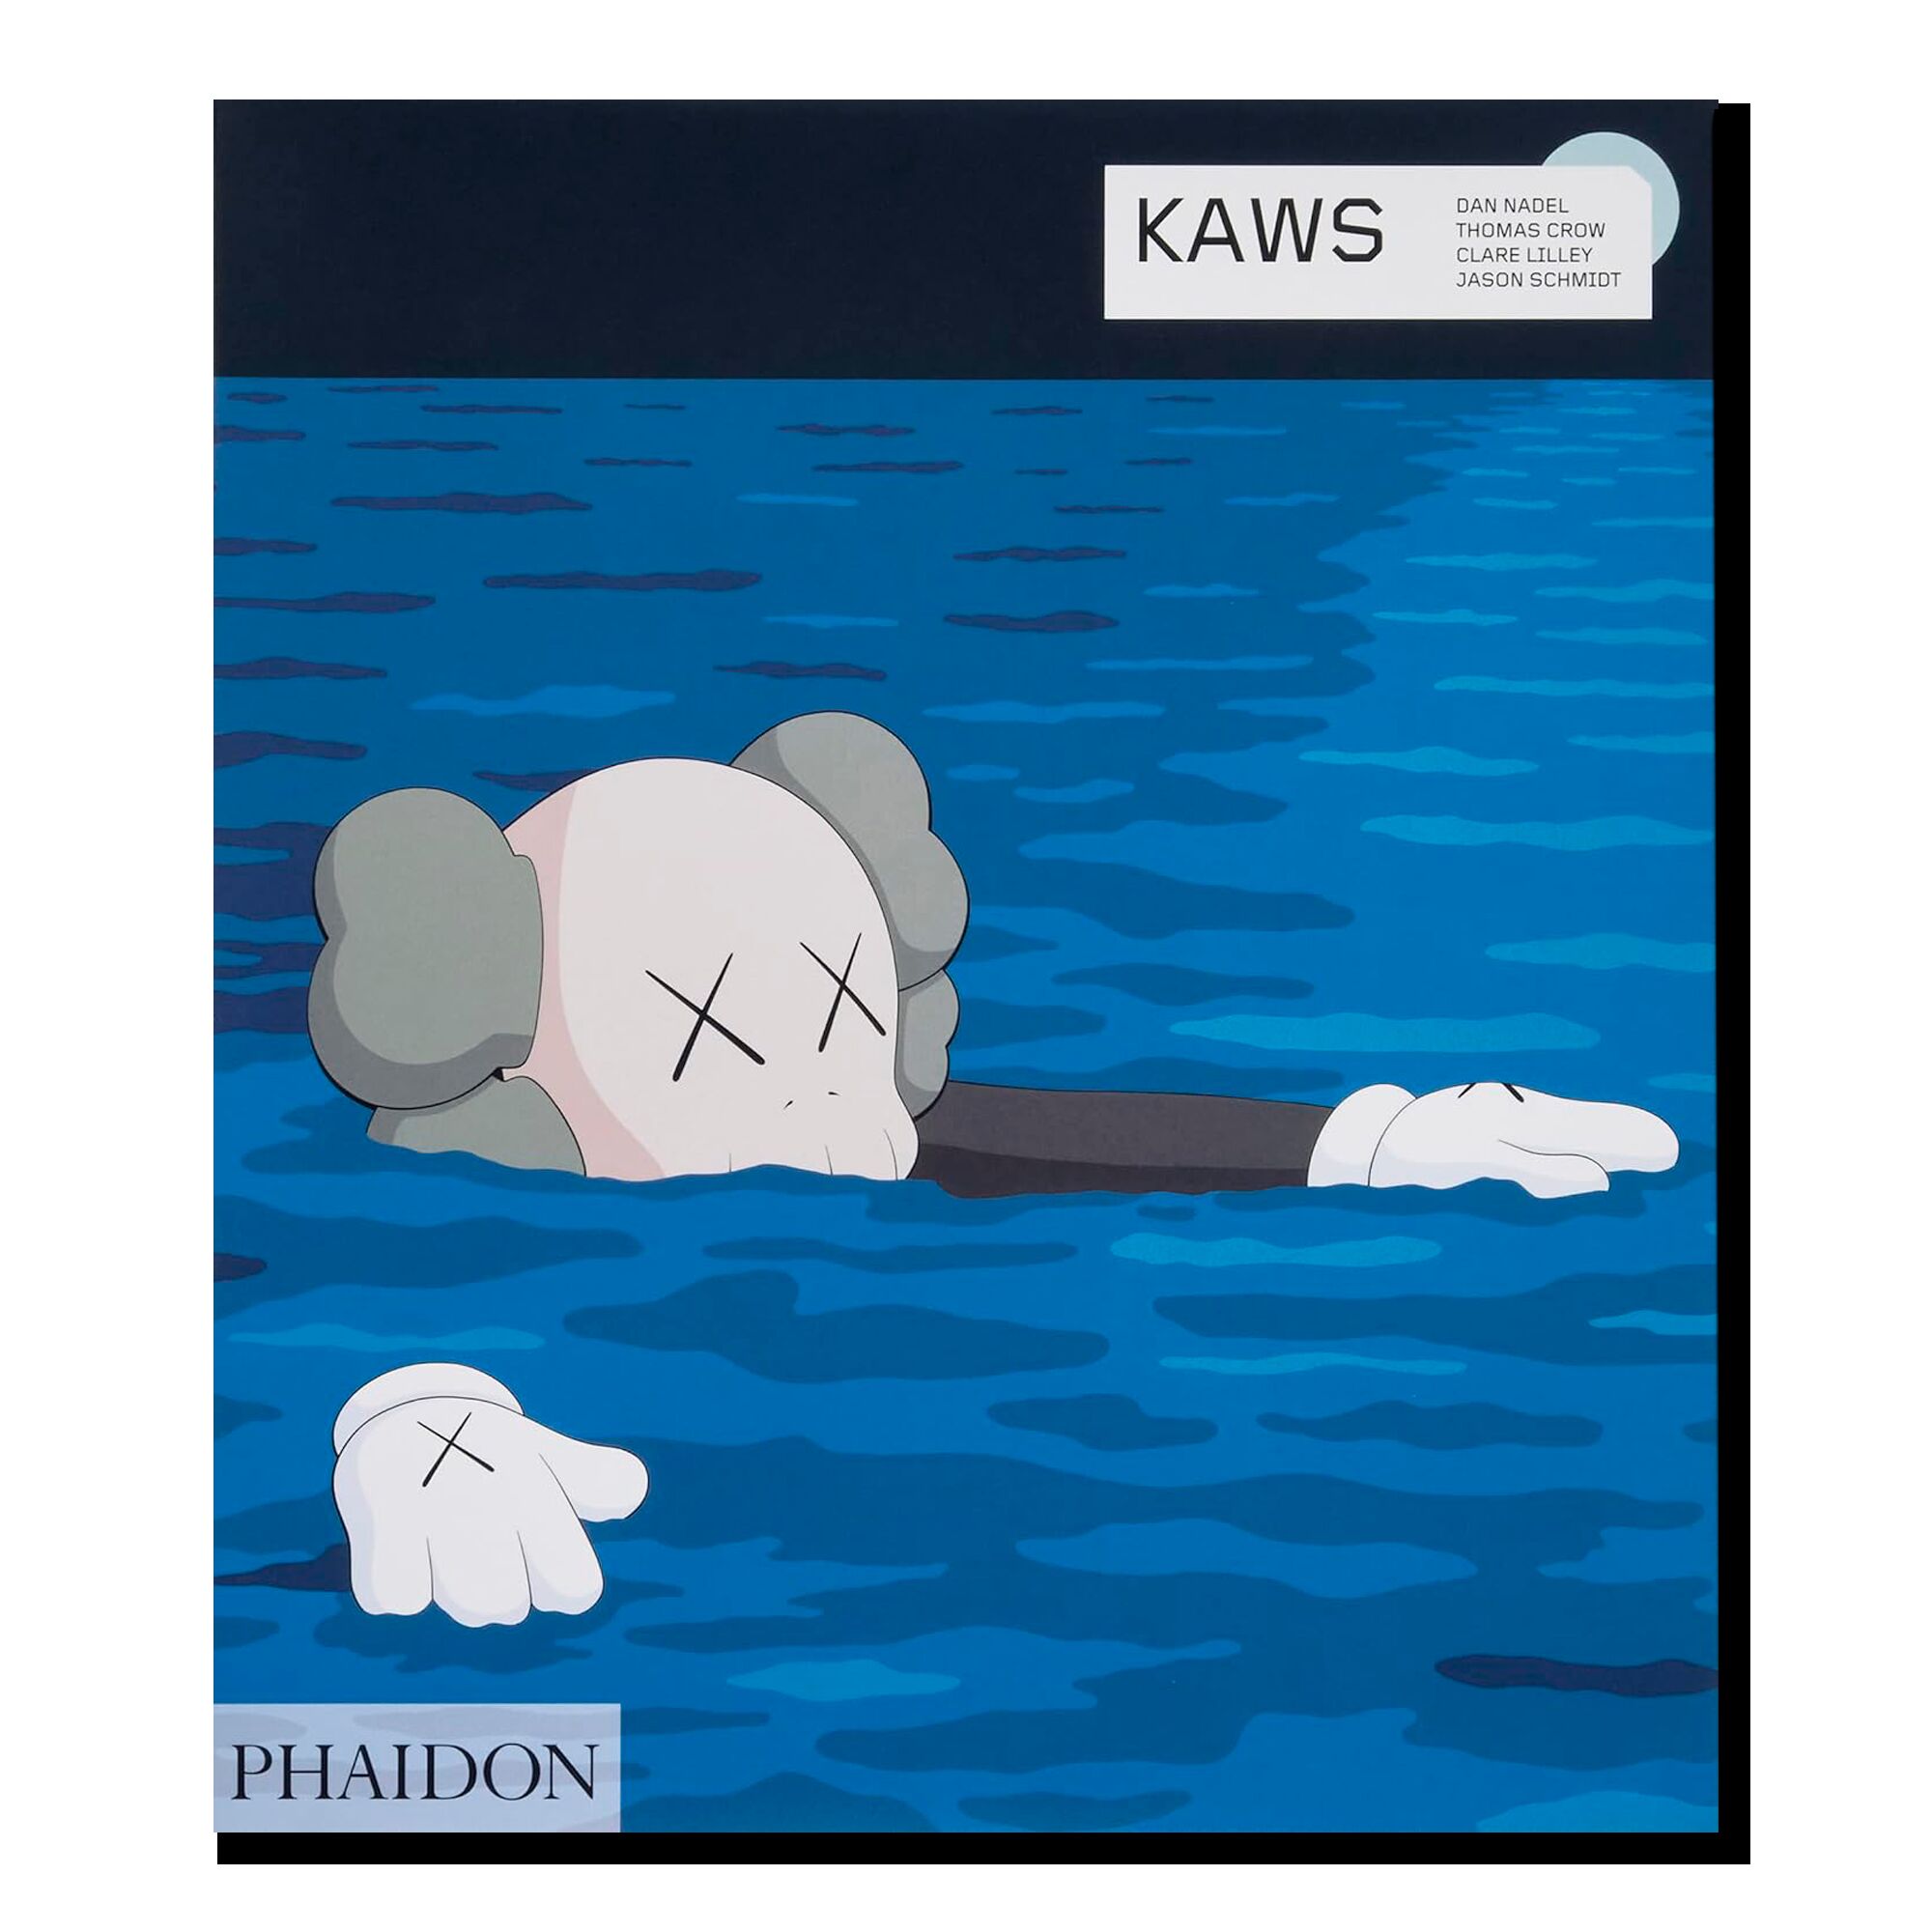 KAWS (Phaidon Contemporary Artists Series)